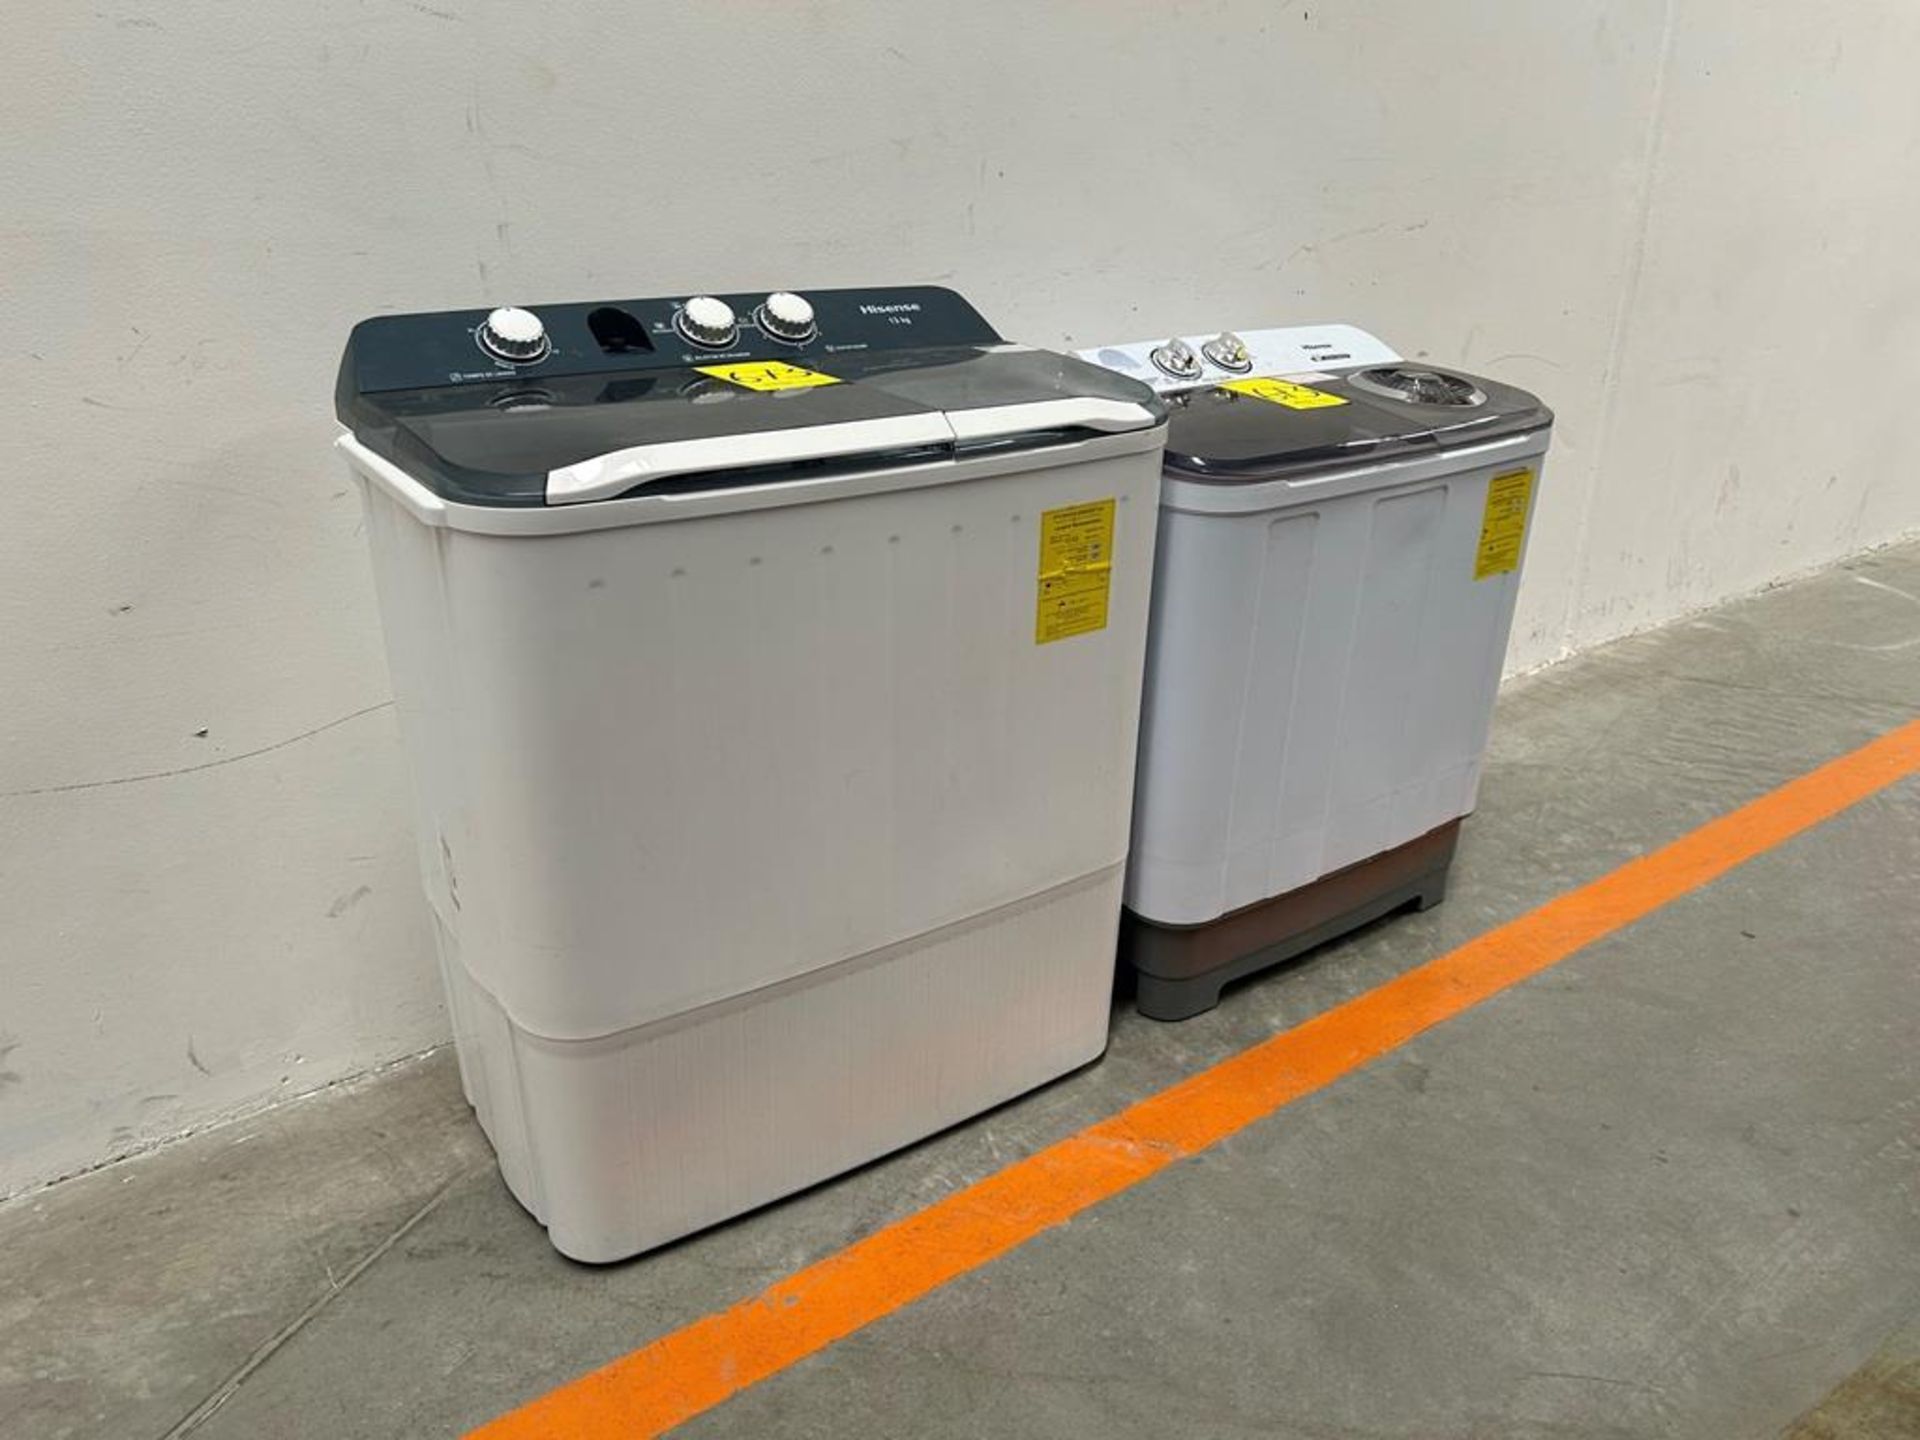 Lote de 2 lavadoras contiene: 1 Lavadora de 13 KG, Marca HISENSE, Modelo WSA301P, Serie 220983, Col - Image 2 of 10